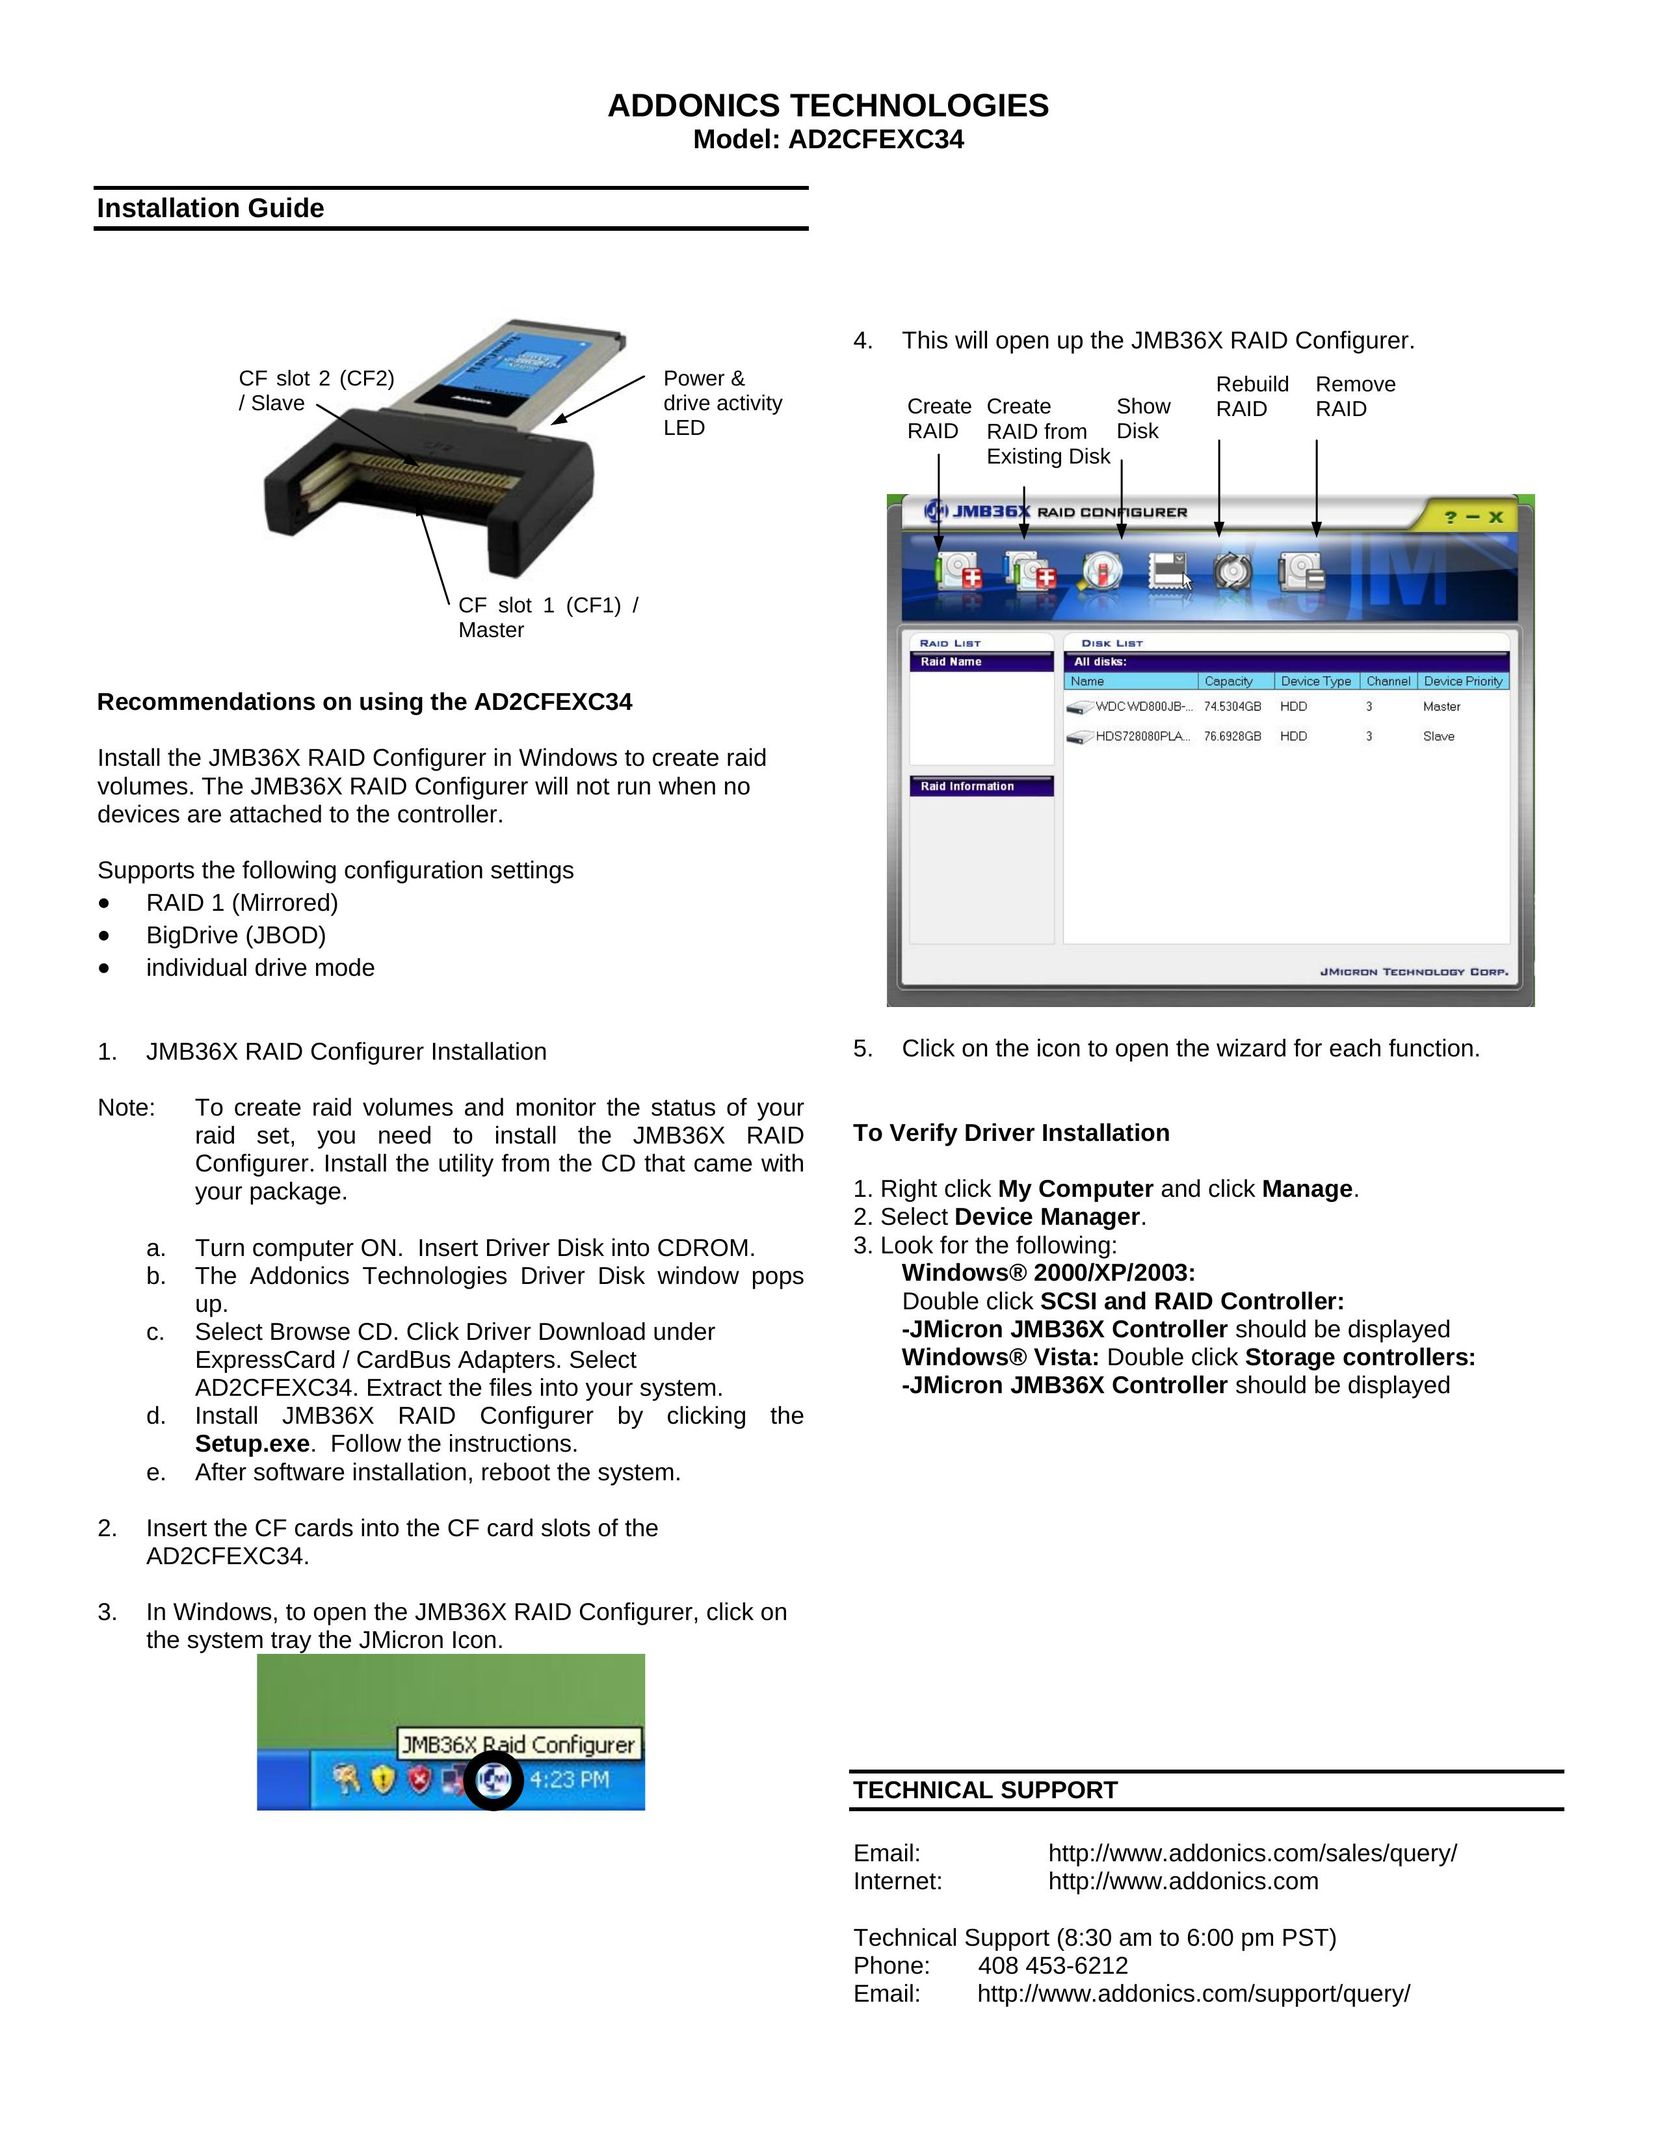 Addonics Technologies AD2CFEXC34 Computer Accessories User Manual